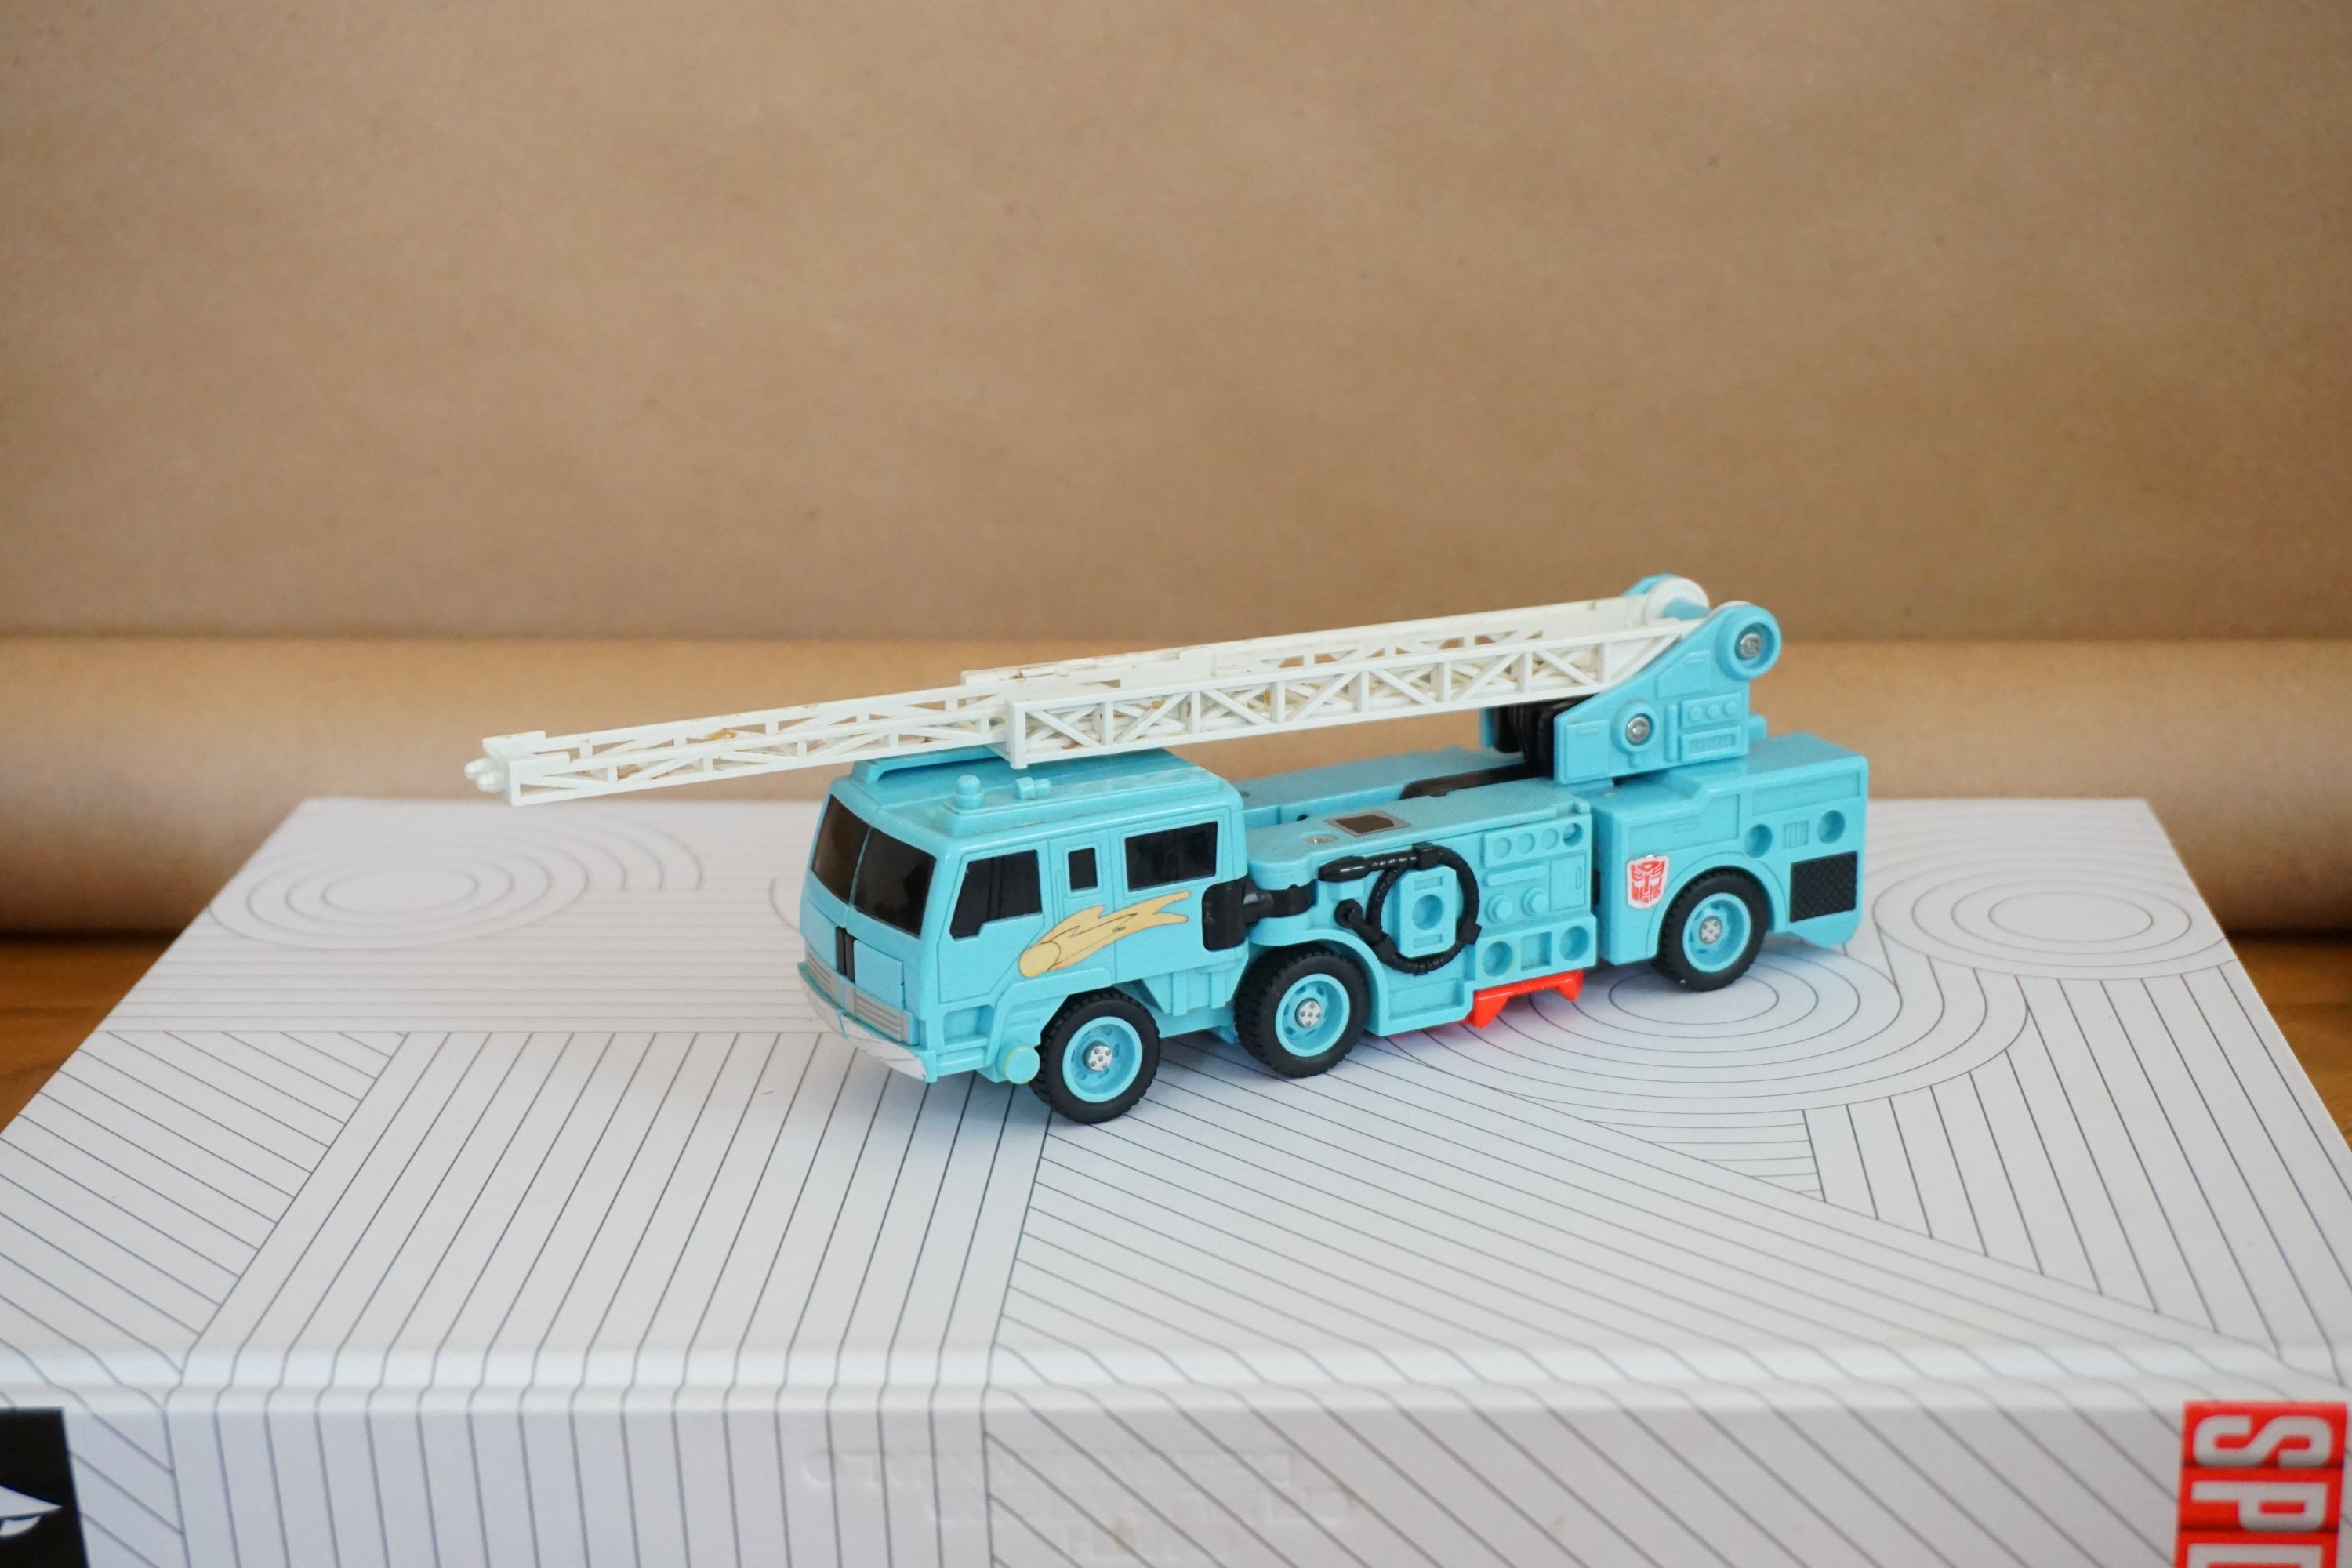 1986 Vintage HASBRO TAKARA Transformer G1 Protectobot (Defensor Combiner): Hotspot (P5) Blue Fire Truck Figure. Made in Japan.